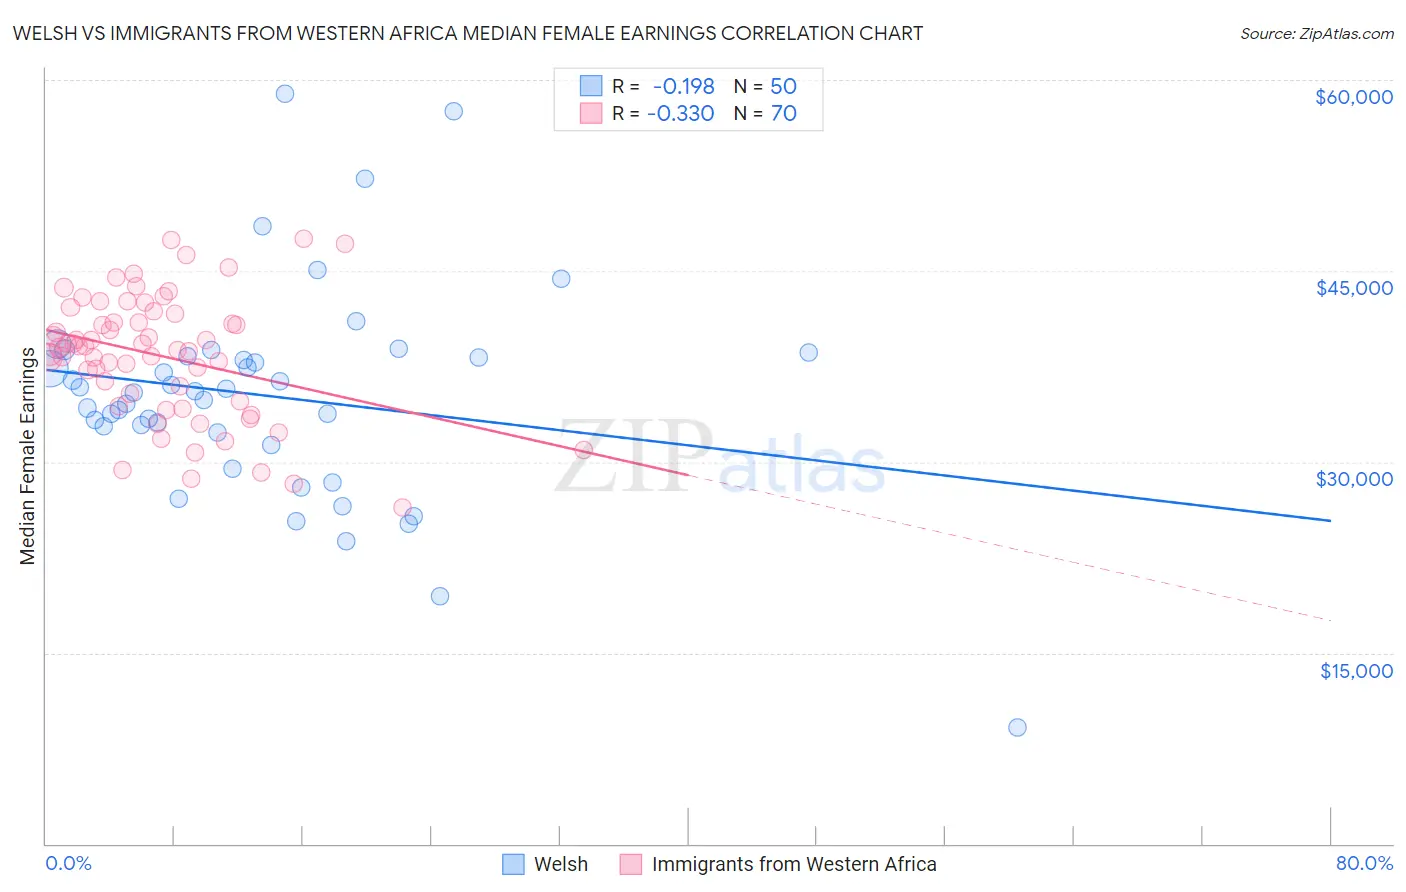 Welsh vs Immigrants from Western Africa Median Female Earnings